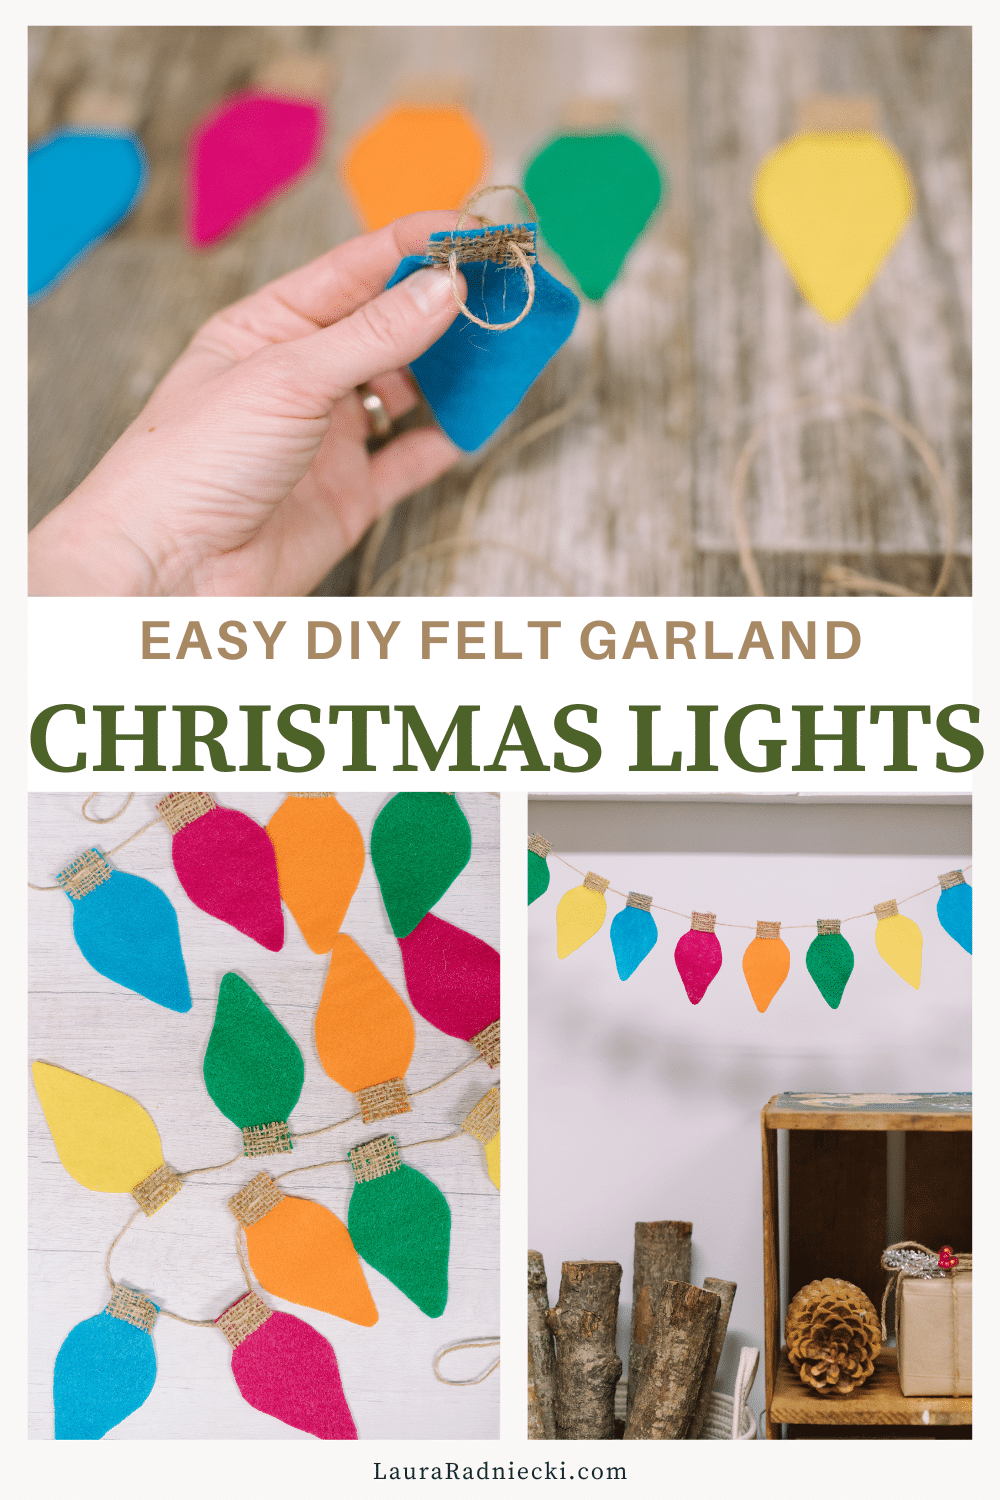 DIY Felt Lightbulb Garland for Christmas